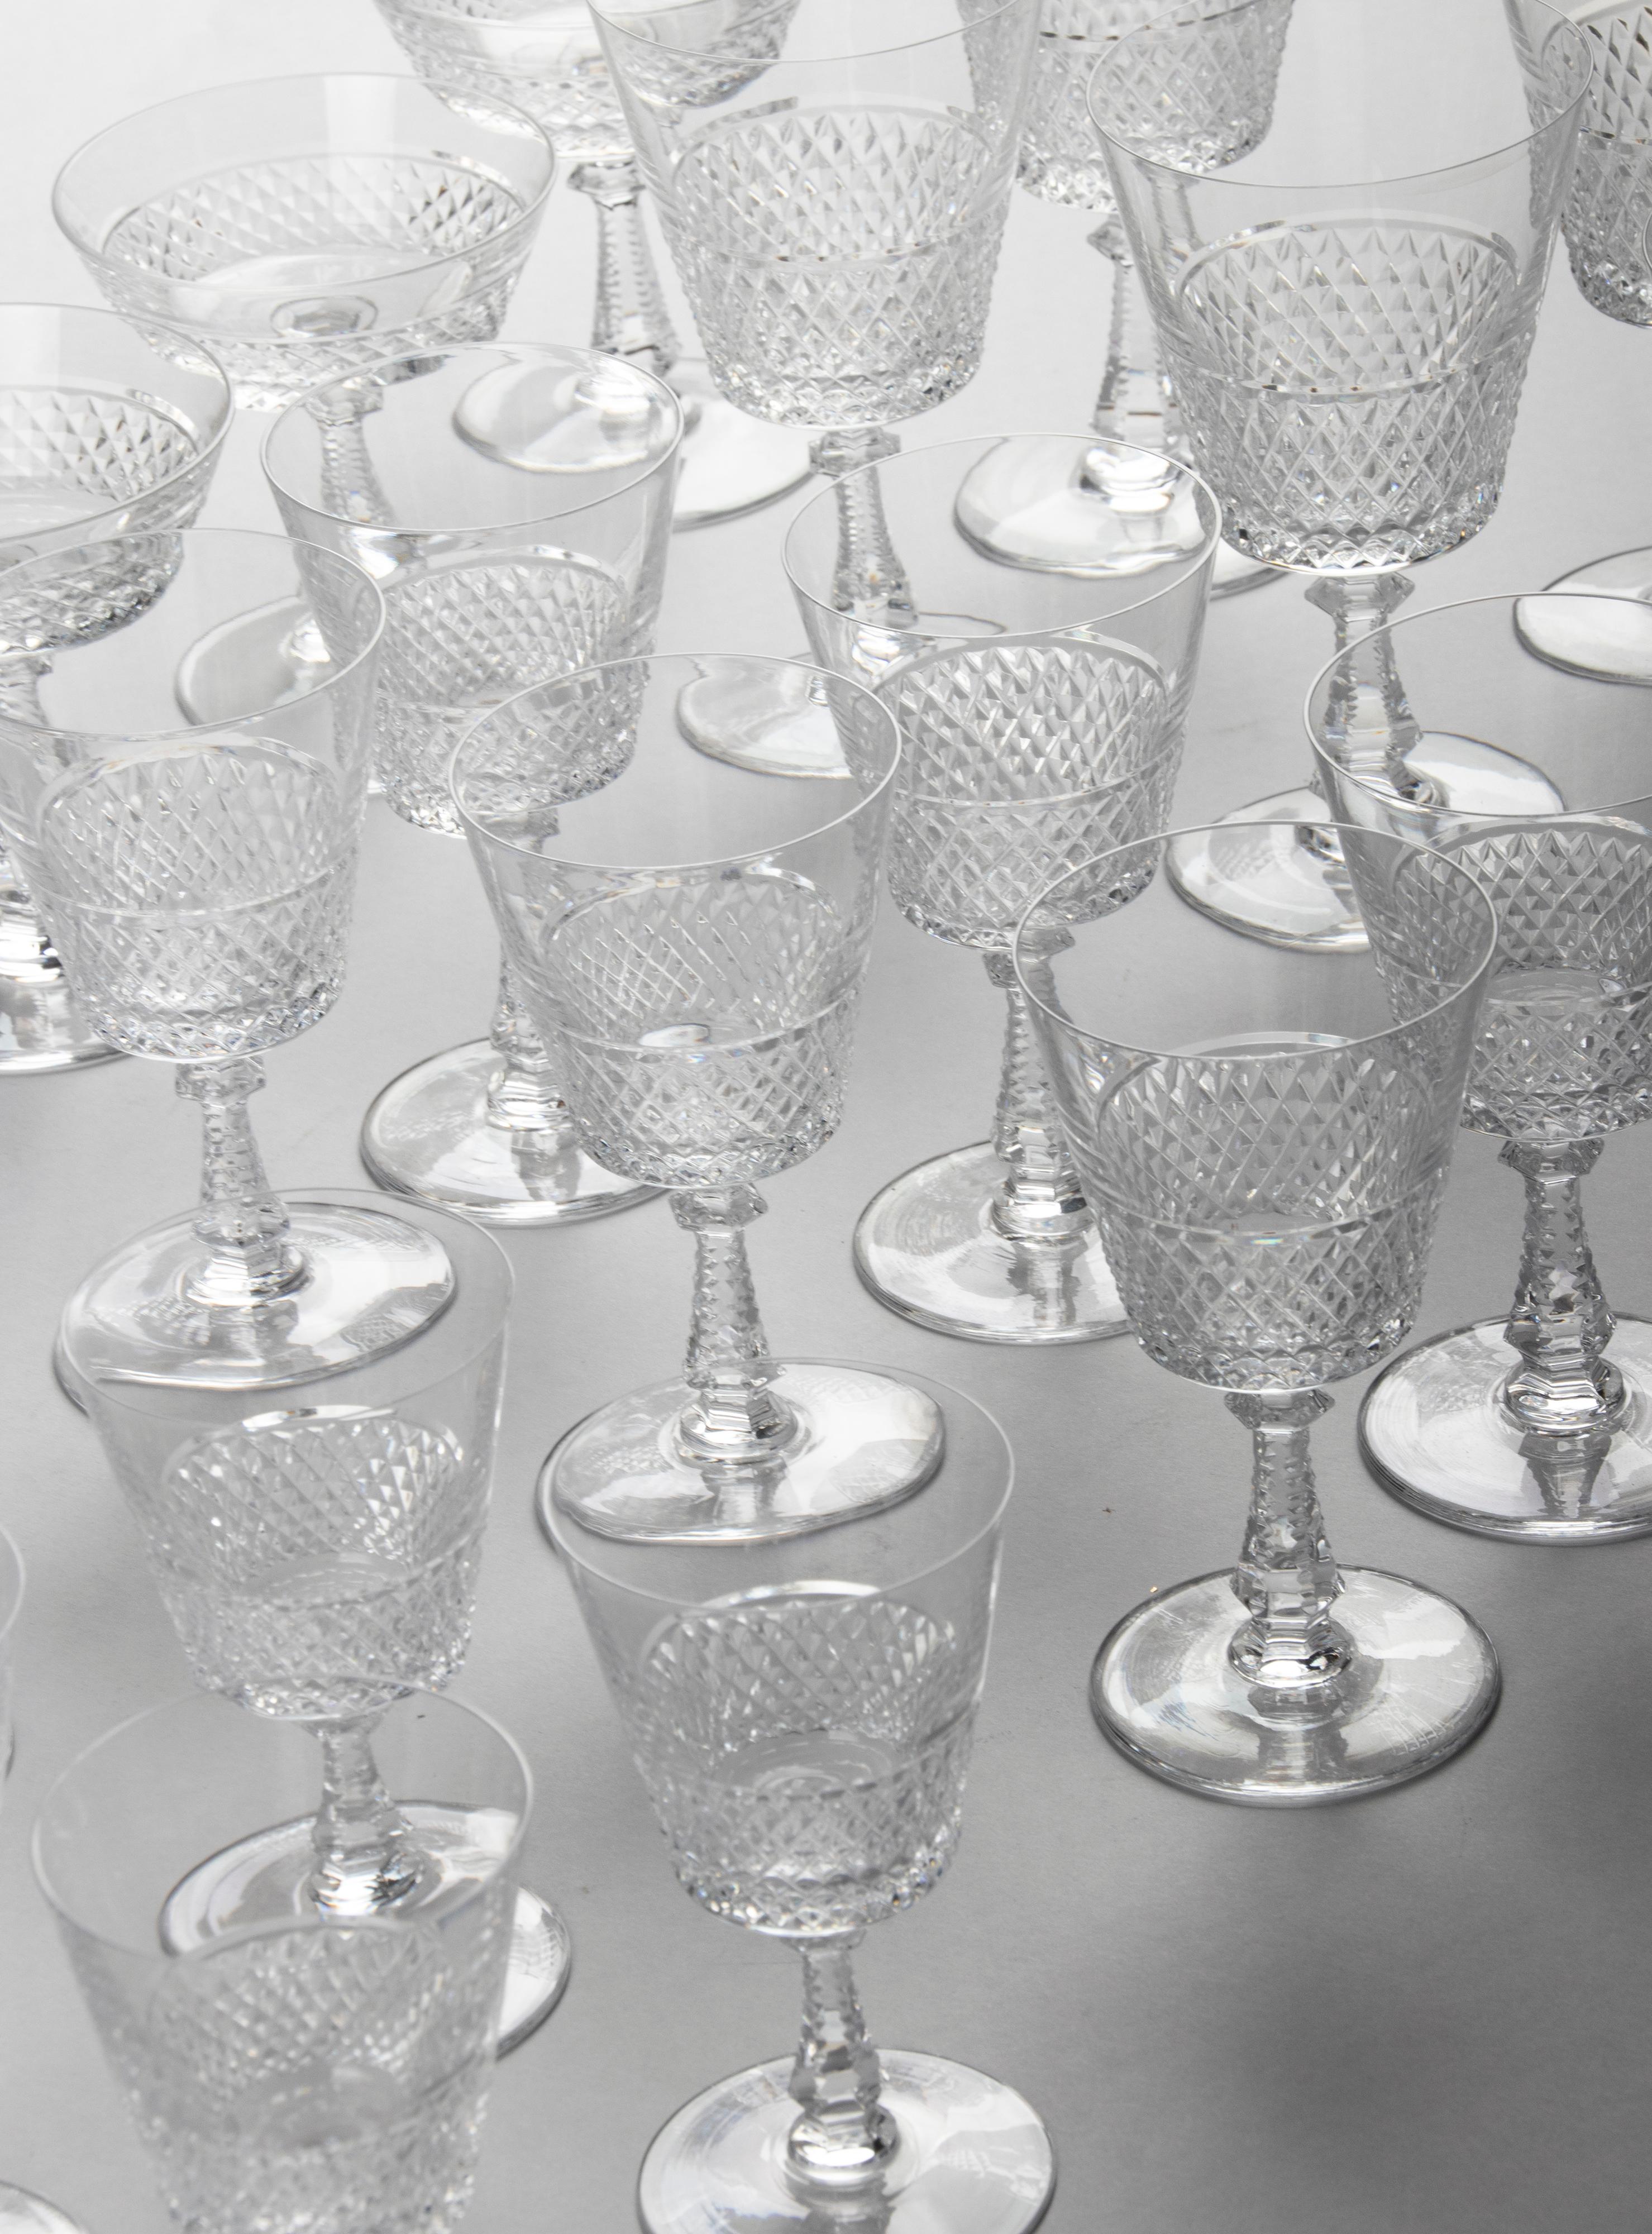 24-Piece Crystal Set of Glasses by Val Saint Lambert model Heidelberg 11